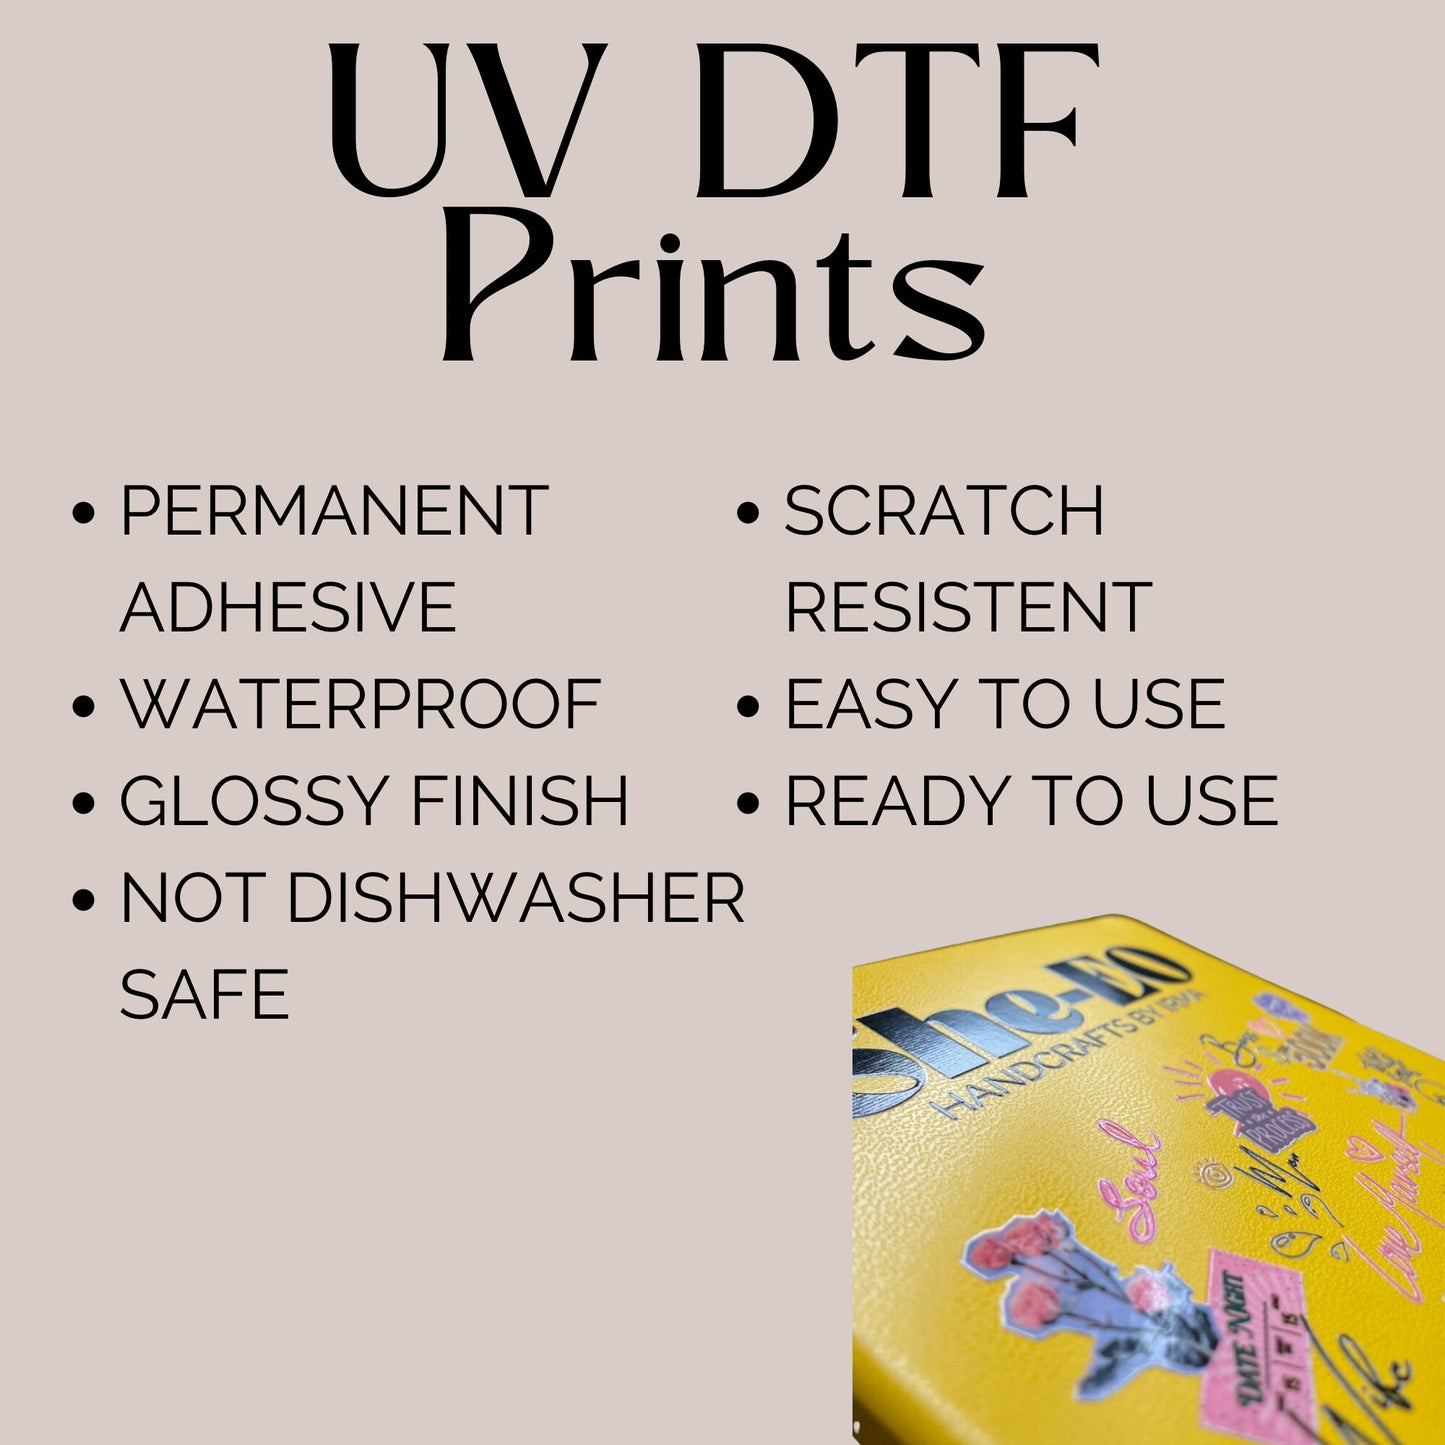 Custom UV DTF Transfer 4x4 100 Qty